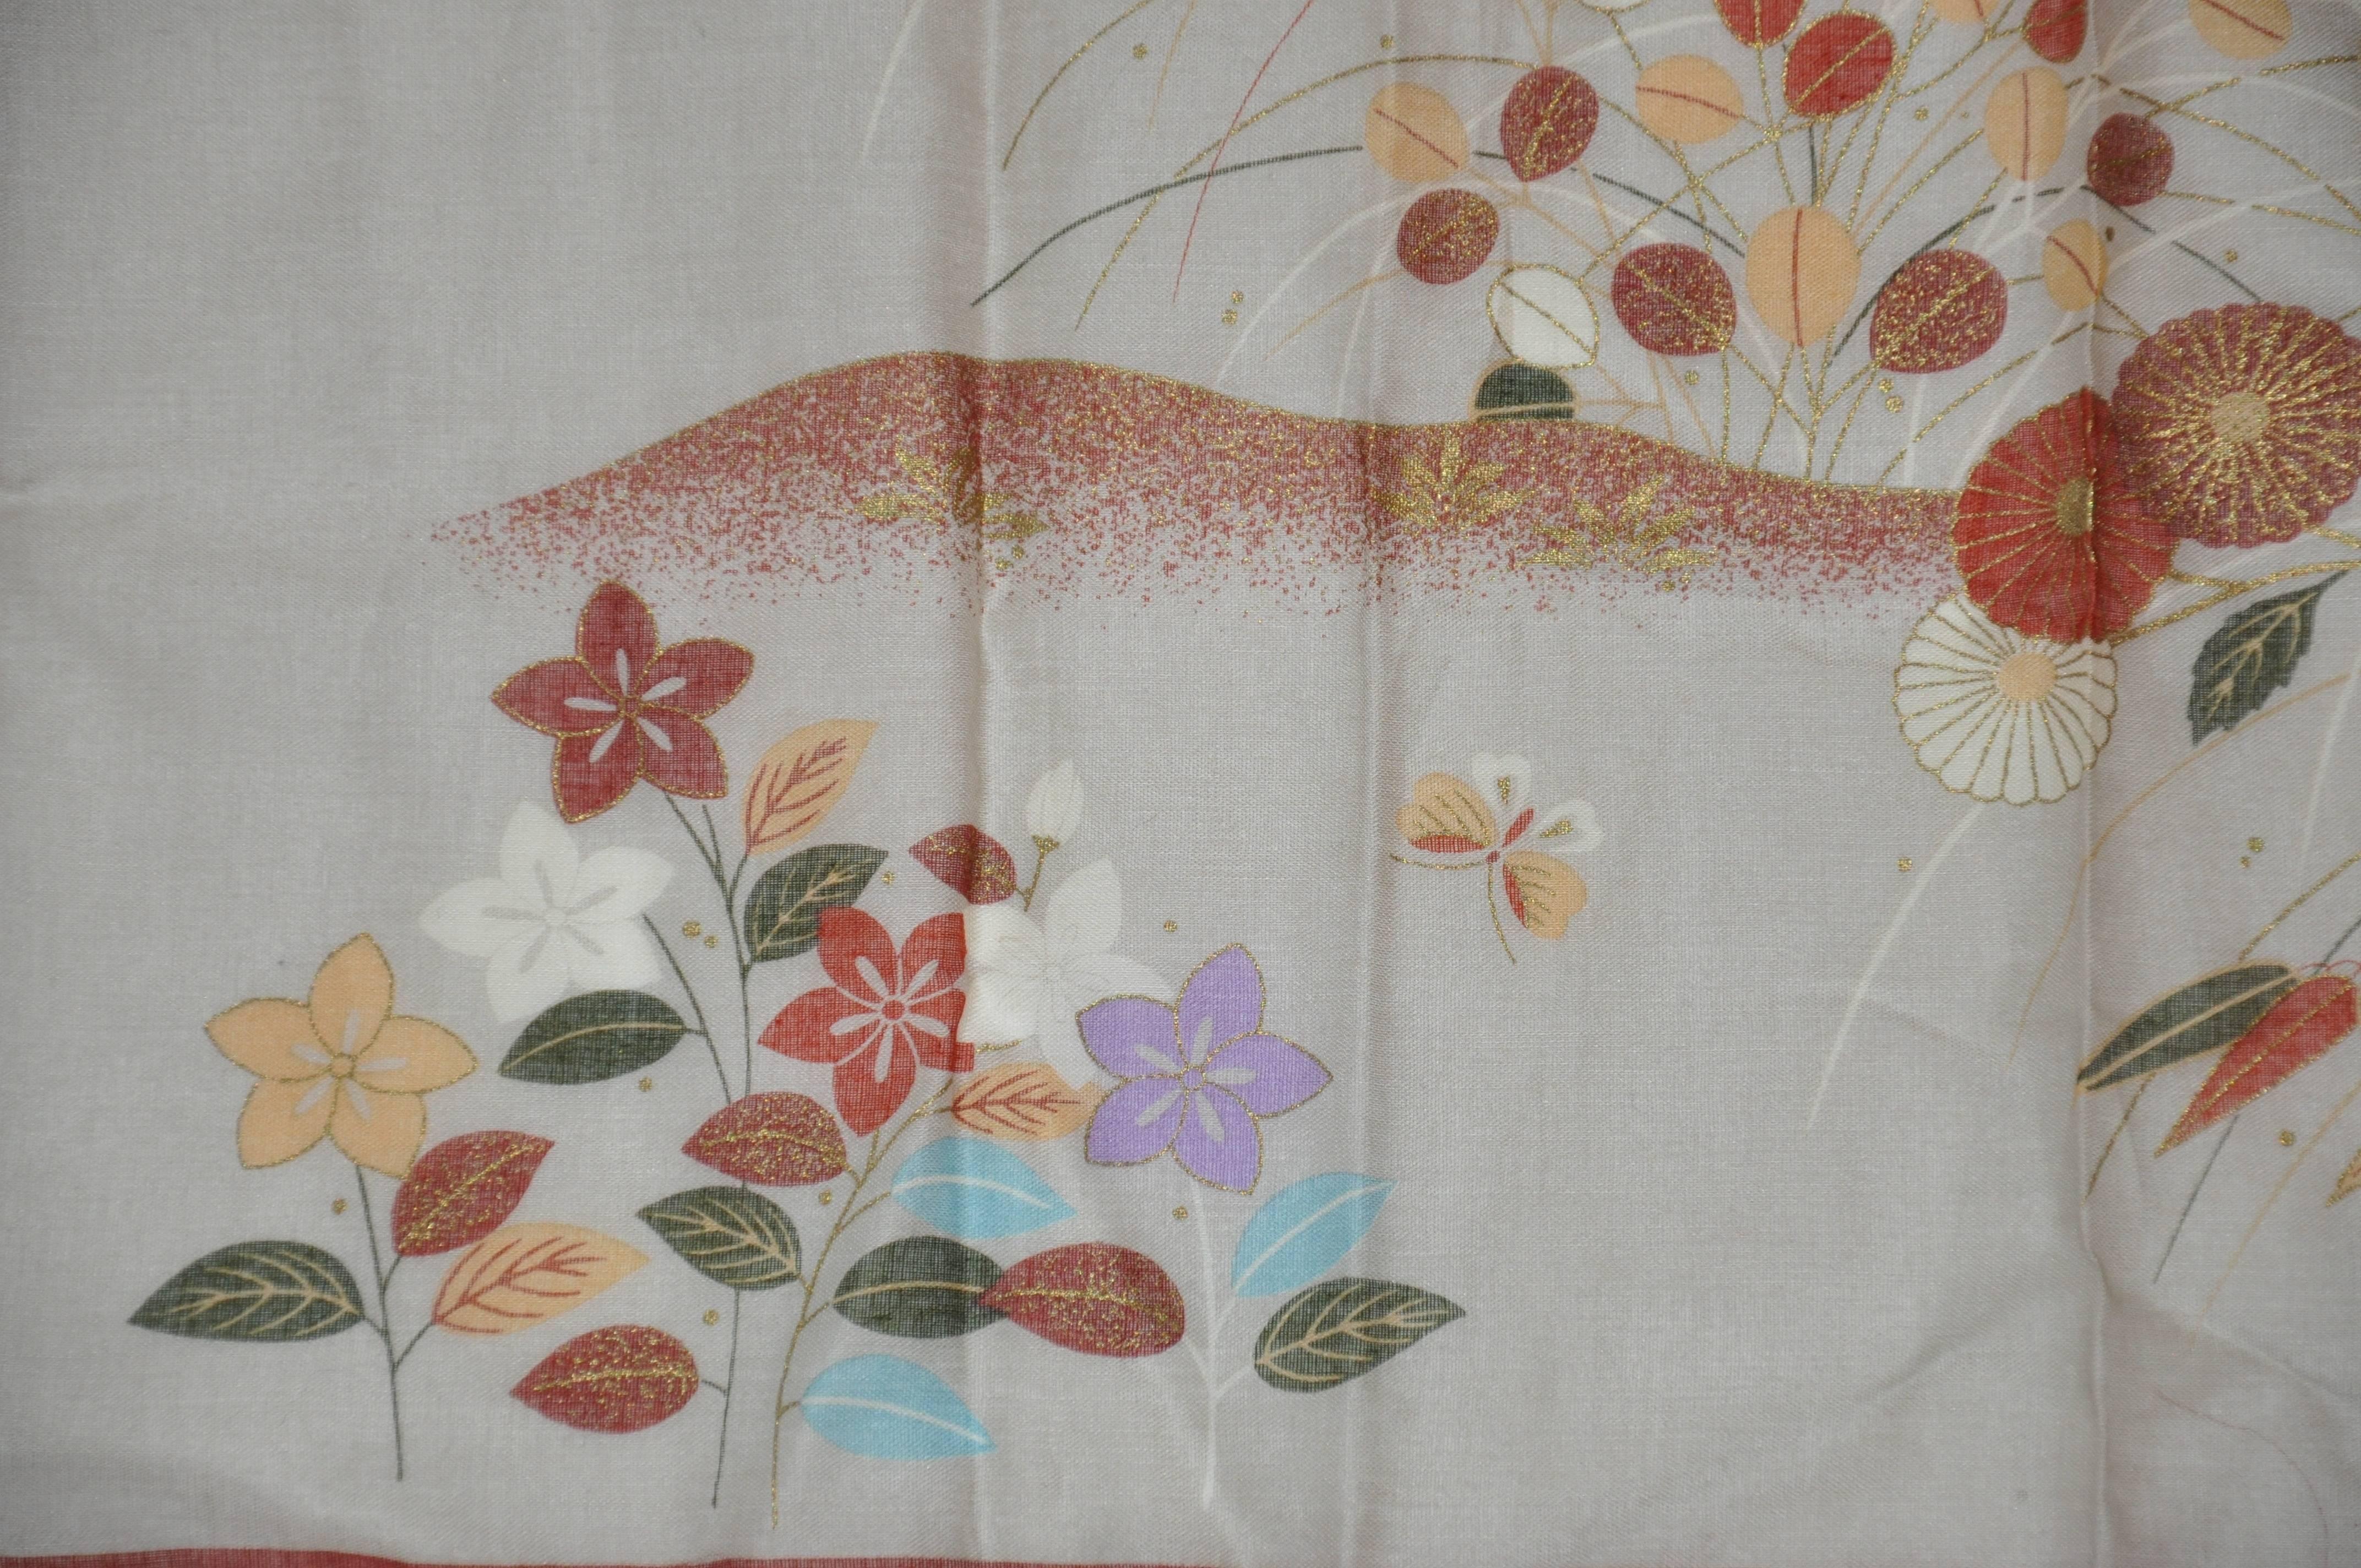 Japanese multi floral silk screen "Floral Garden" silk handkerchief measures 18 1/2" x 18". Made in Japan.